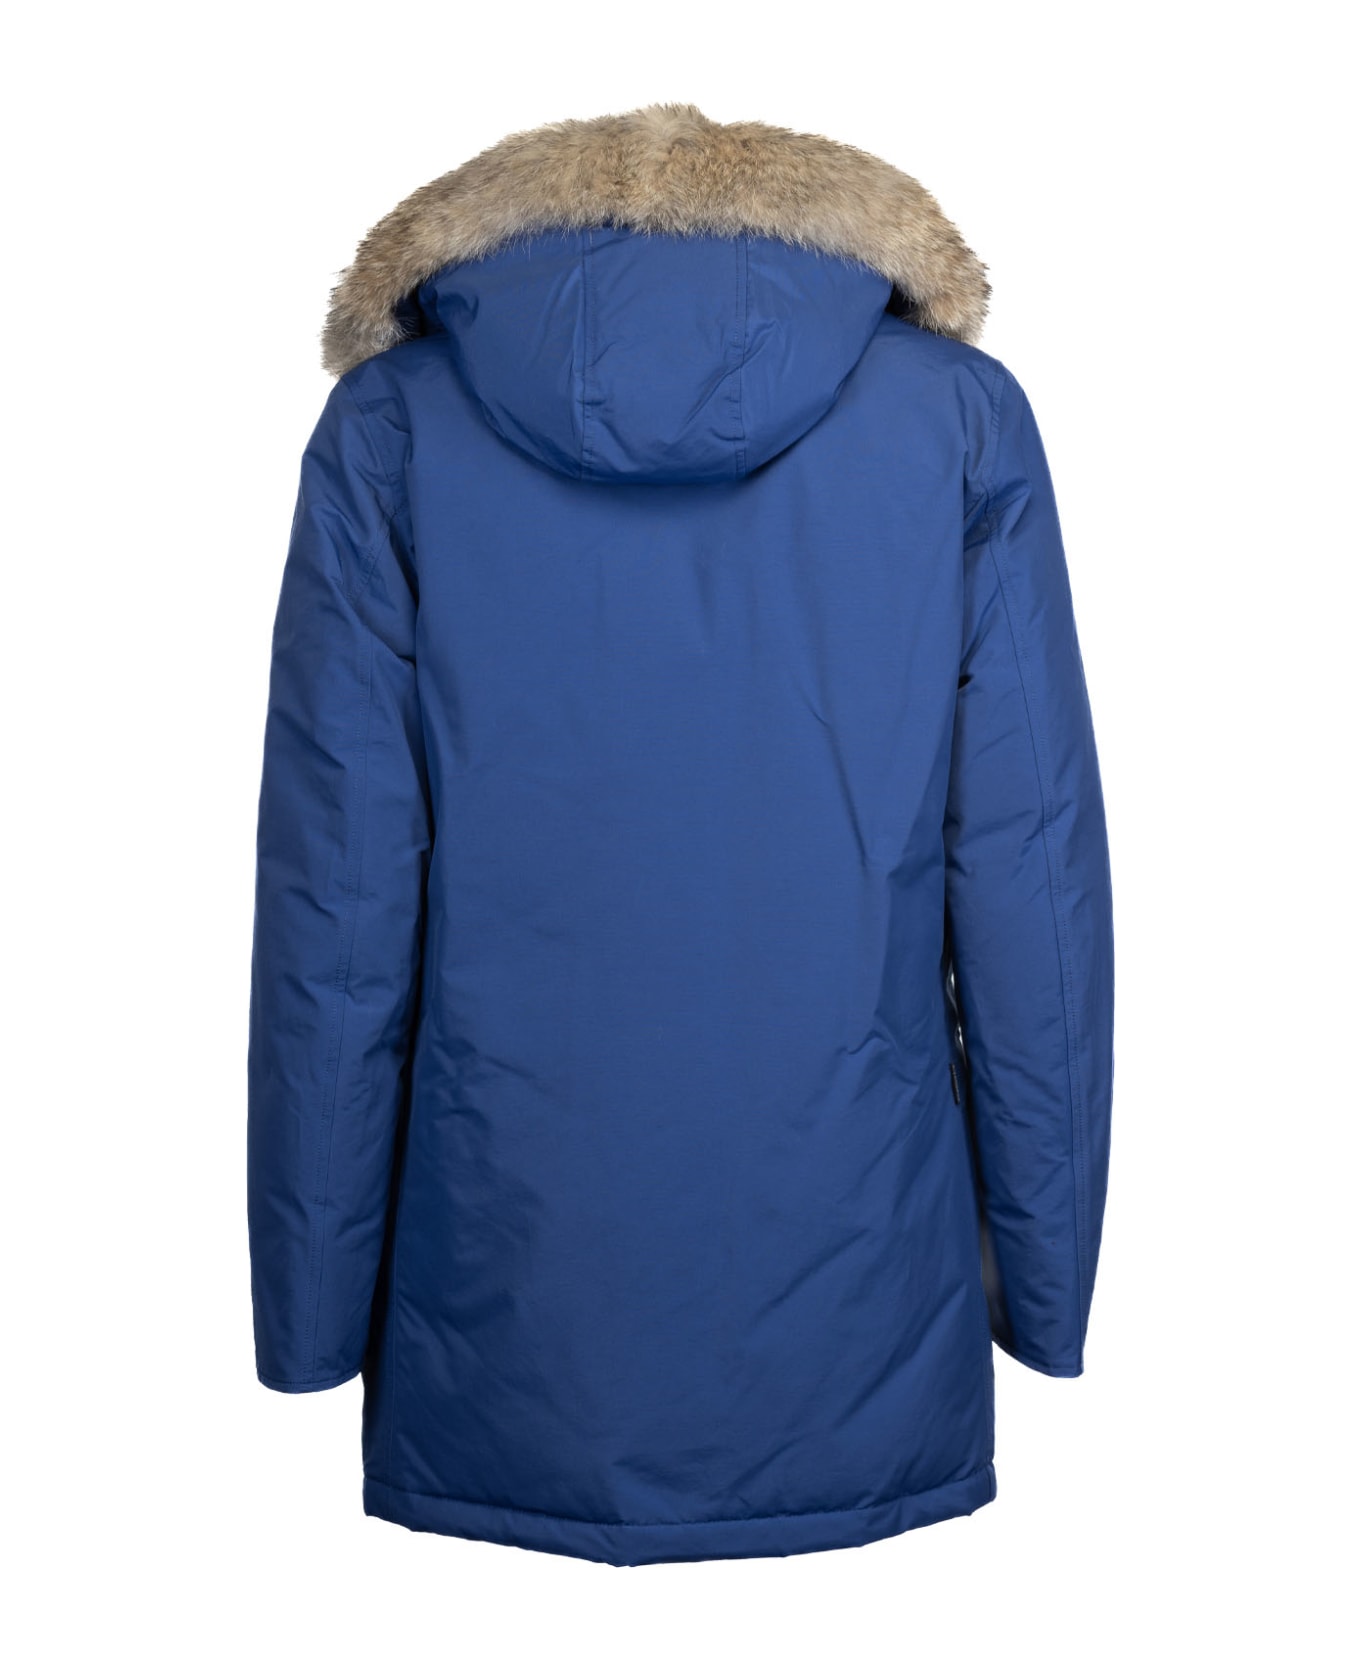 Woolrich Arctic Detachable Fur Parka - Blu Chiaro